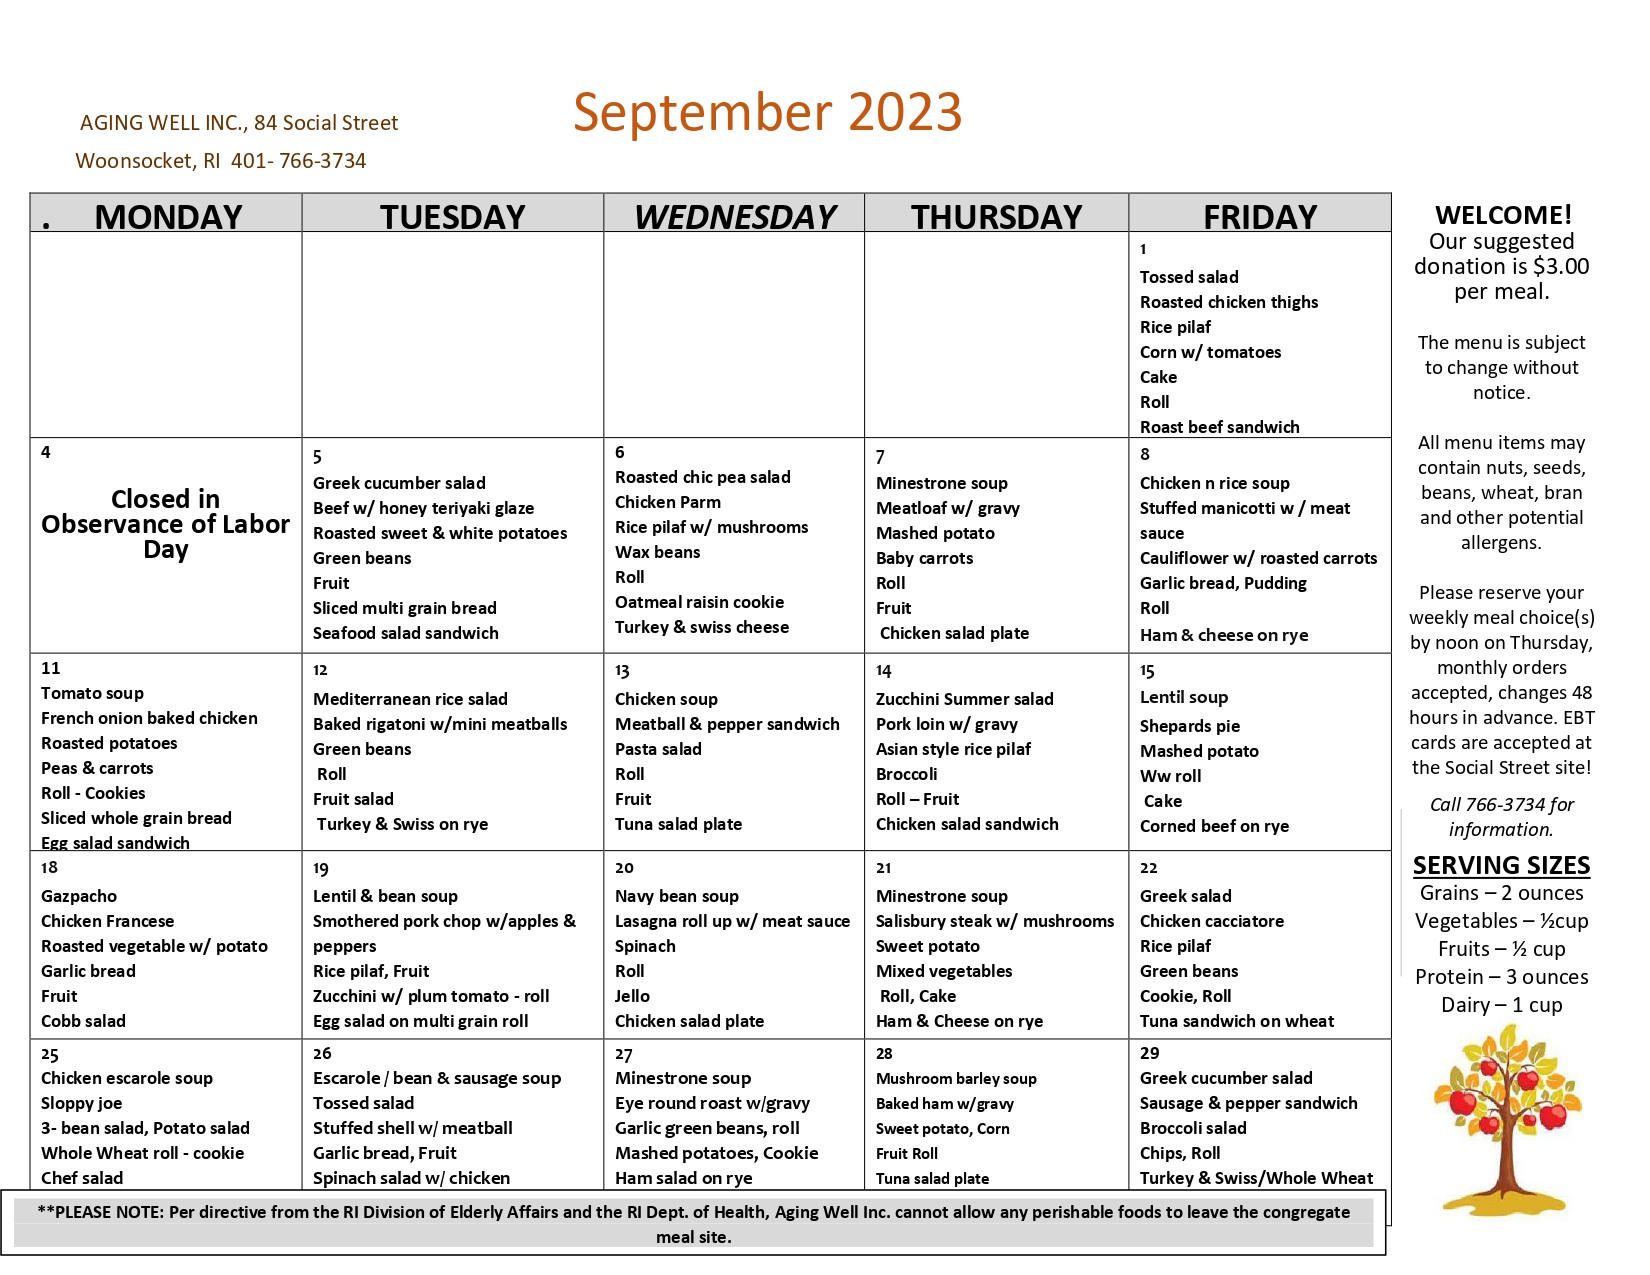 September menu